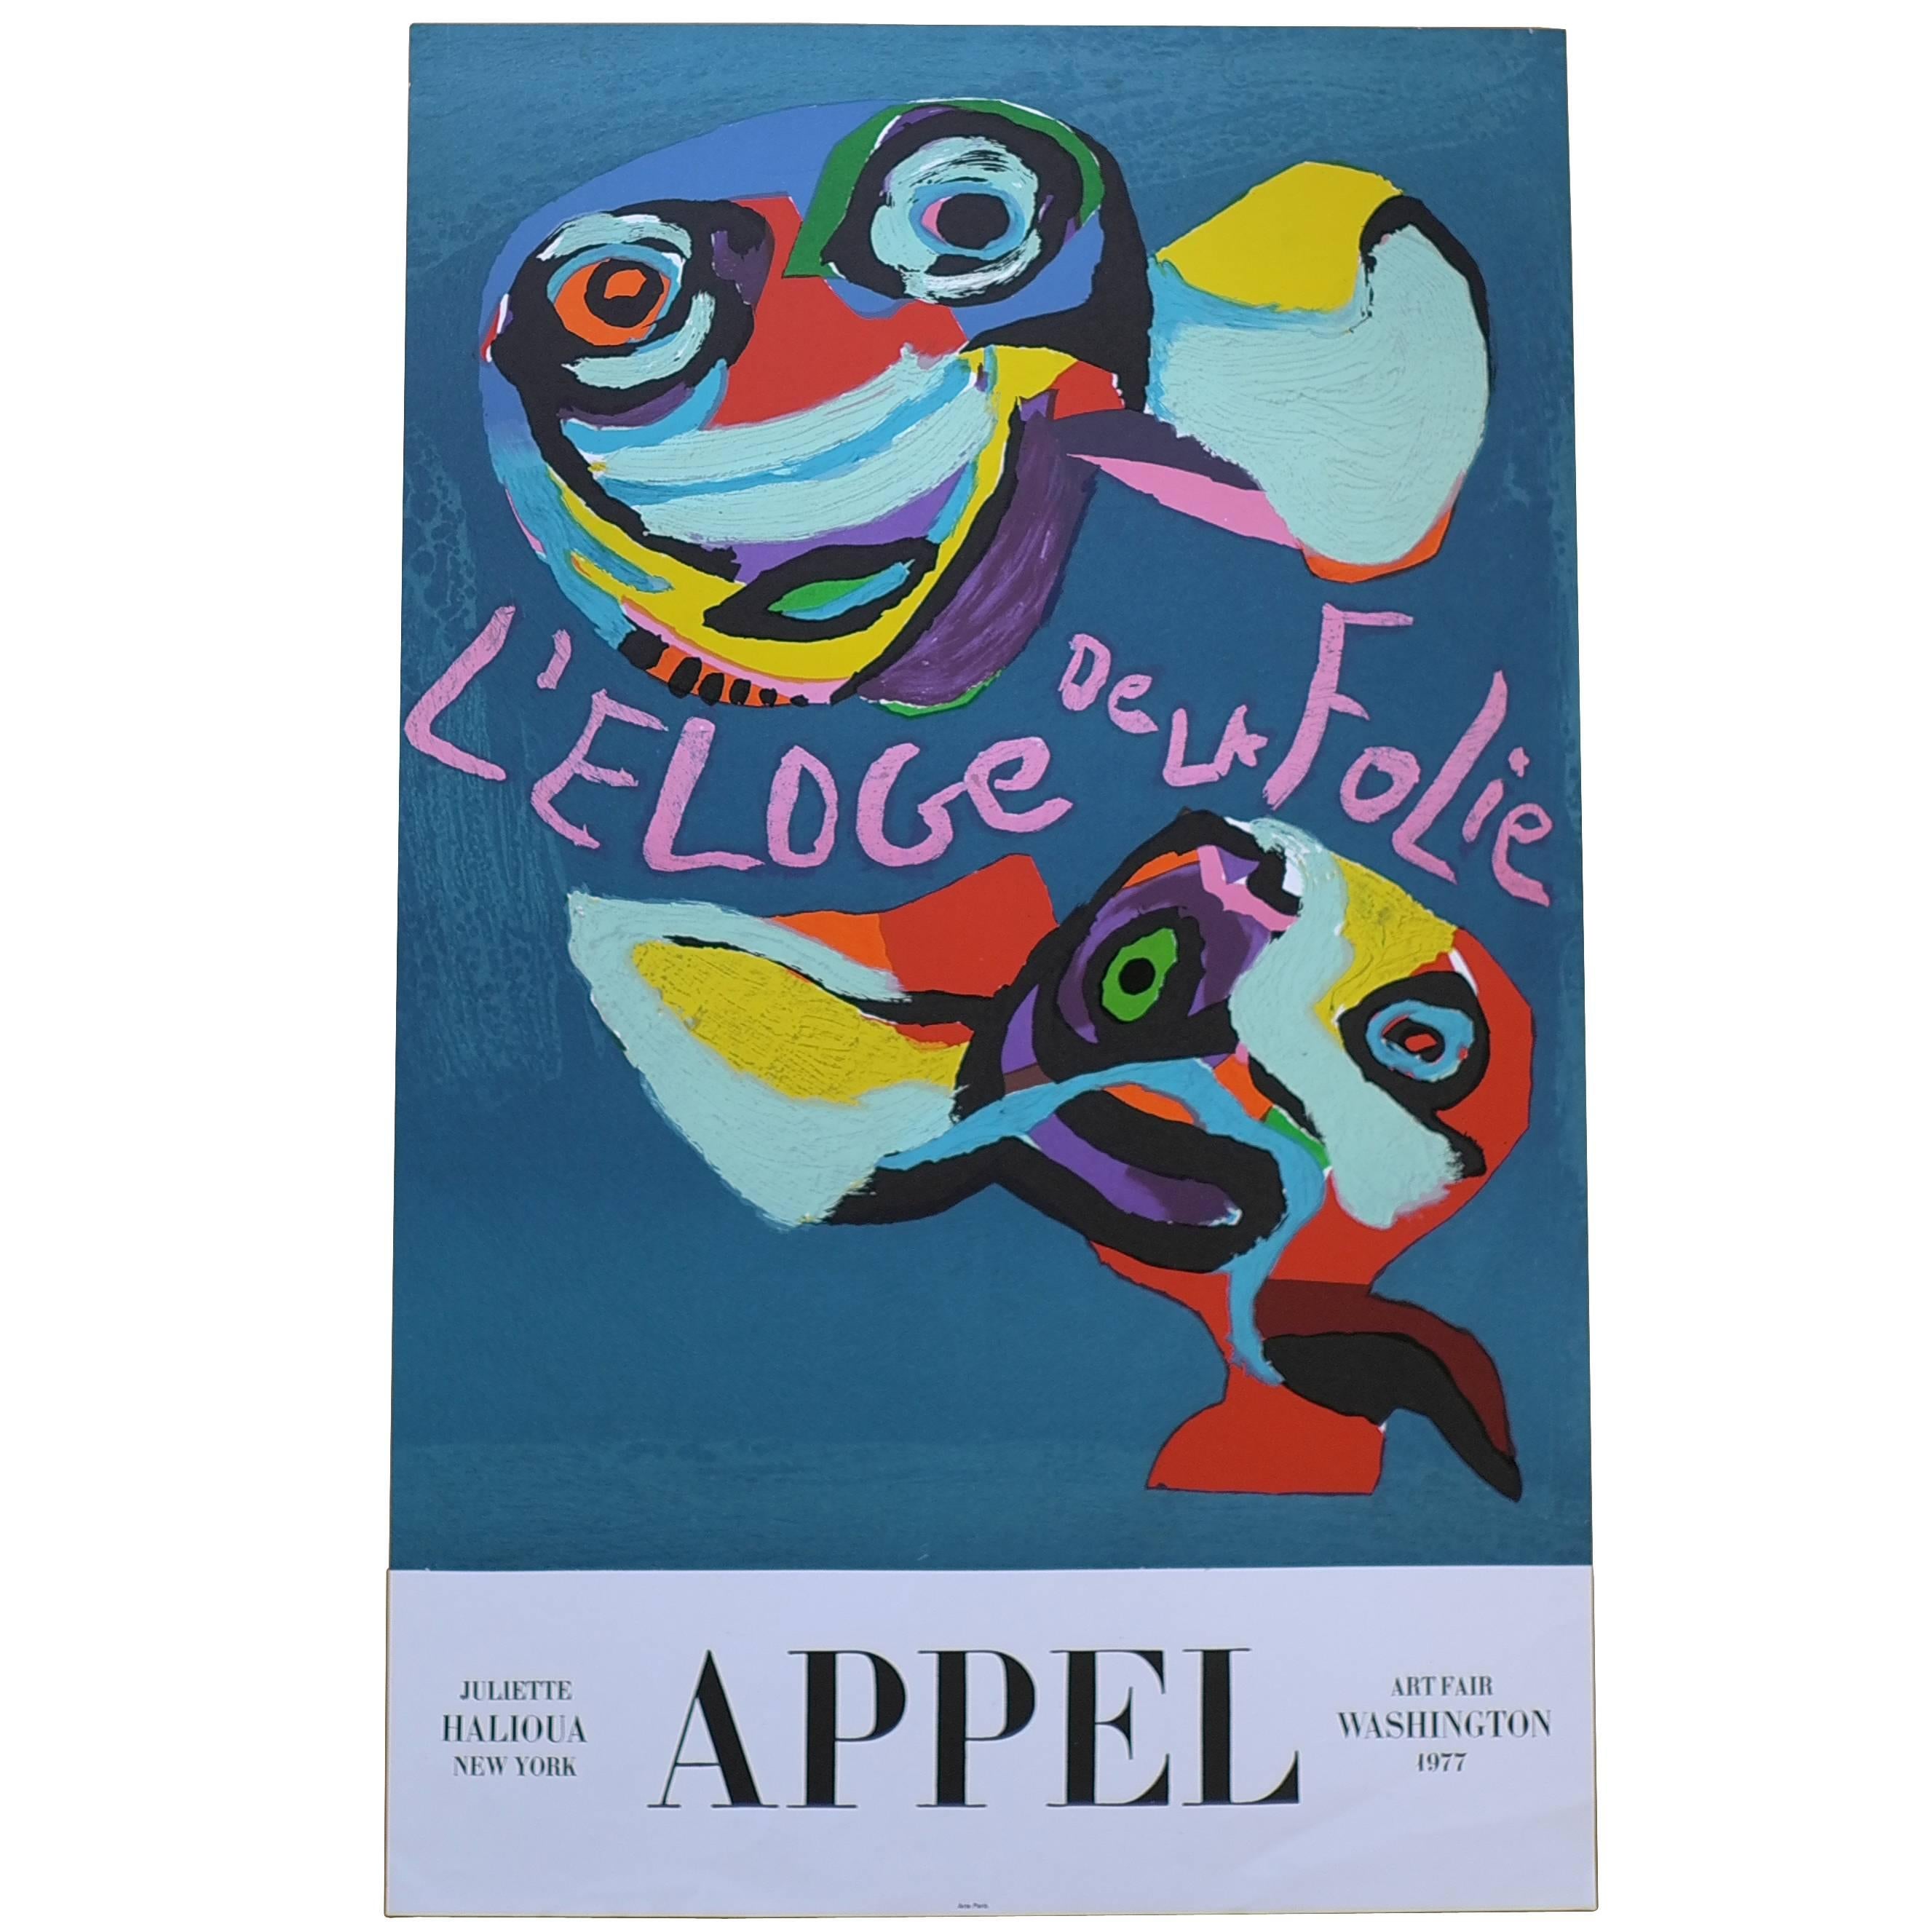 Karel Appel Litho Poster, Art Fair Washington